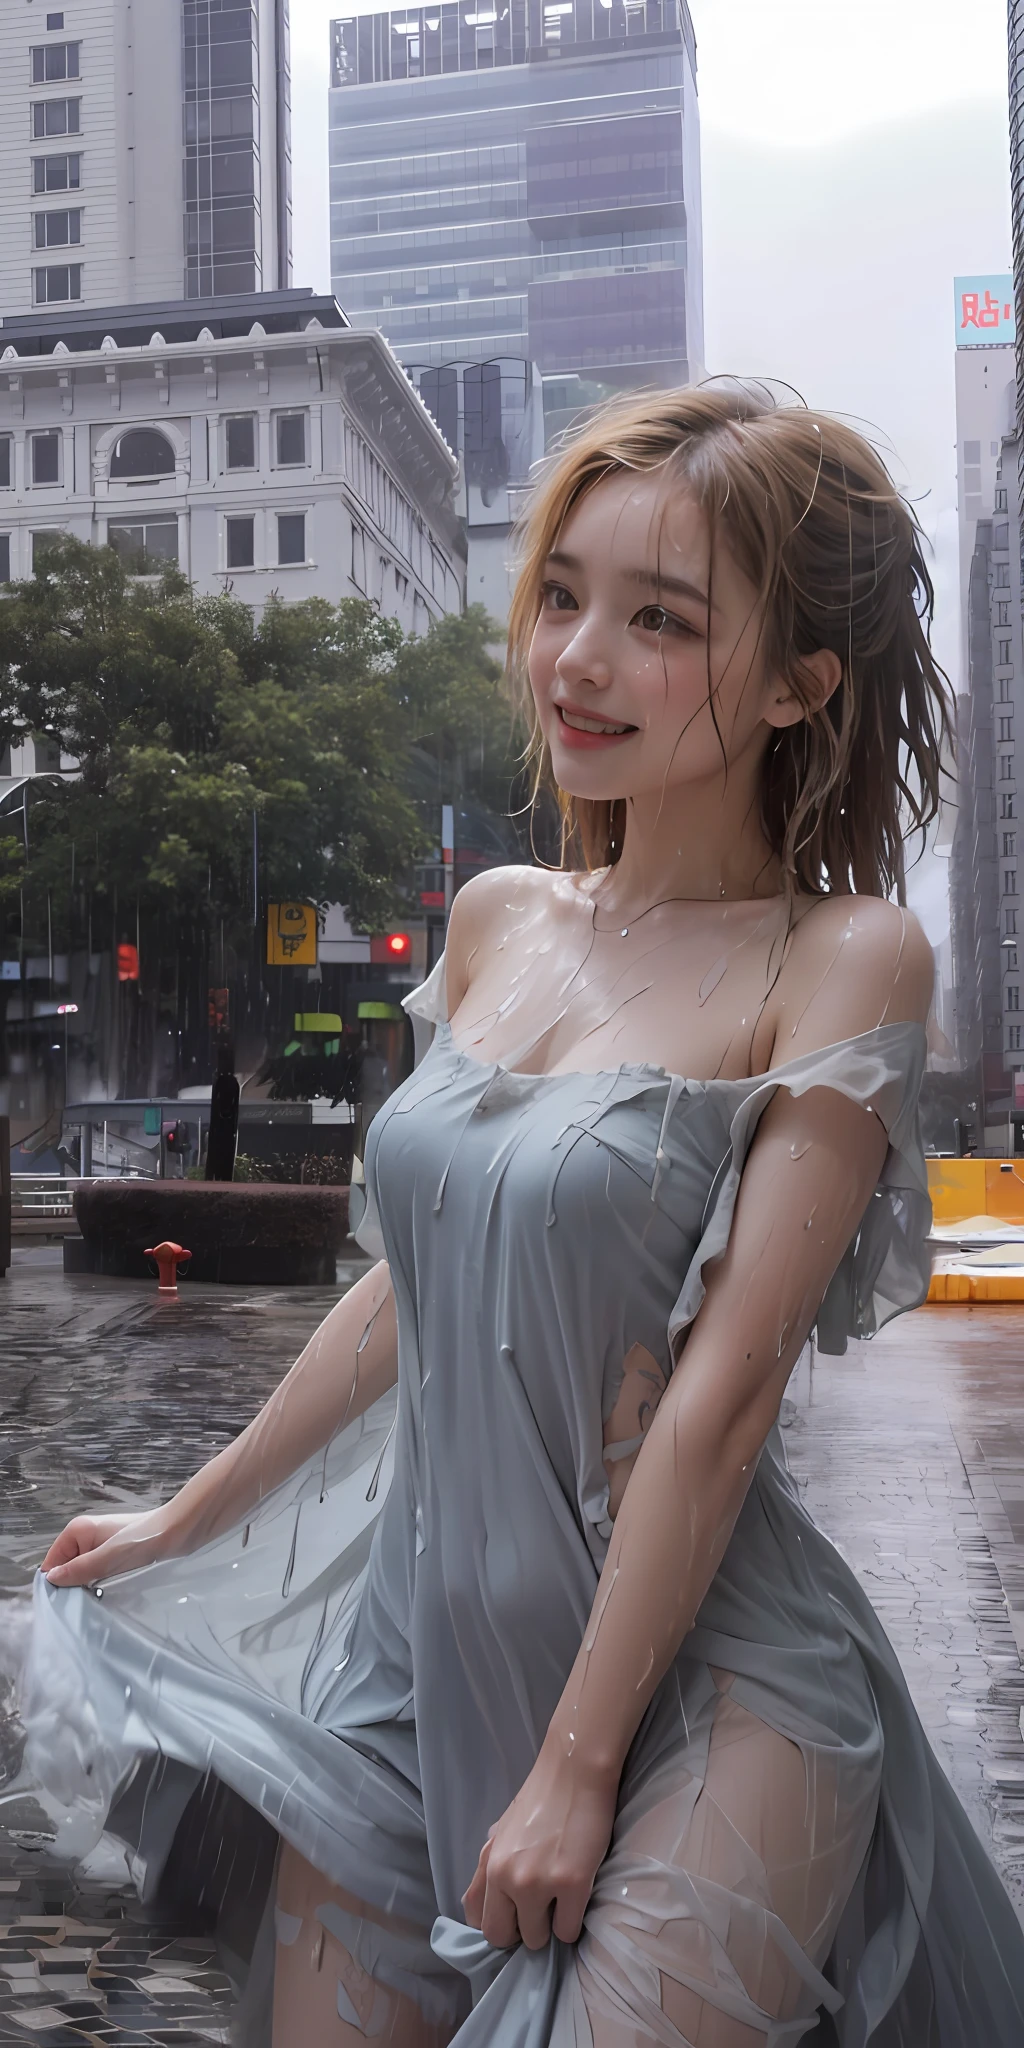 Best picture quality, masterpiece, ultra high resolution, (fidelity :1.4), photo, 1 girl,[(shame grin)],white dress, (Rain, Street:1.3), (((Dim))), (((desperate))), (((dark, cinematic))),(Torn dress:1.5), (Wet dress:1.4), bare shoulders,Real rain,wet hair,standing, outdoors, (((wind lift)))